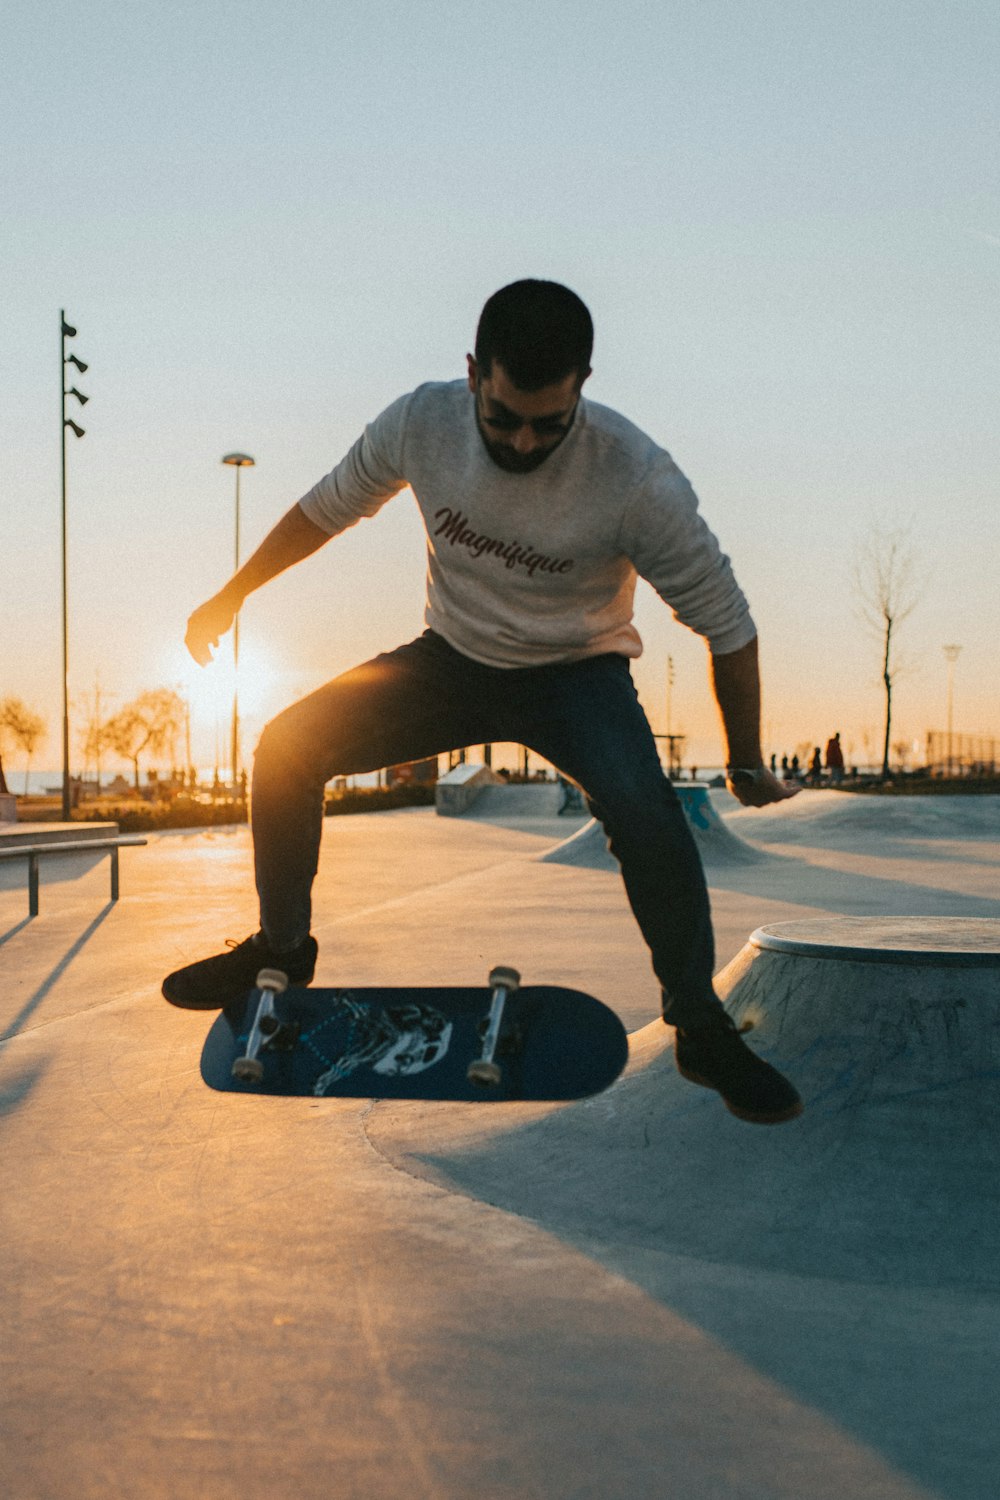 man in gray long sleeve shirt and black pants riding skateboard during daytime